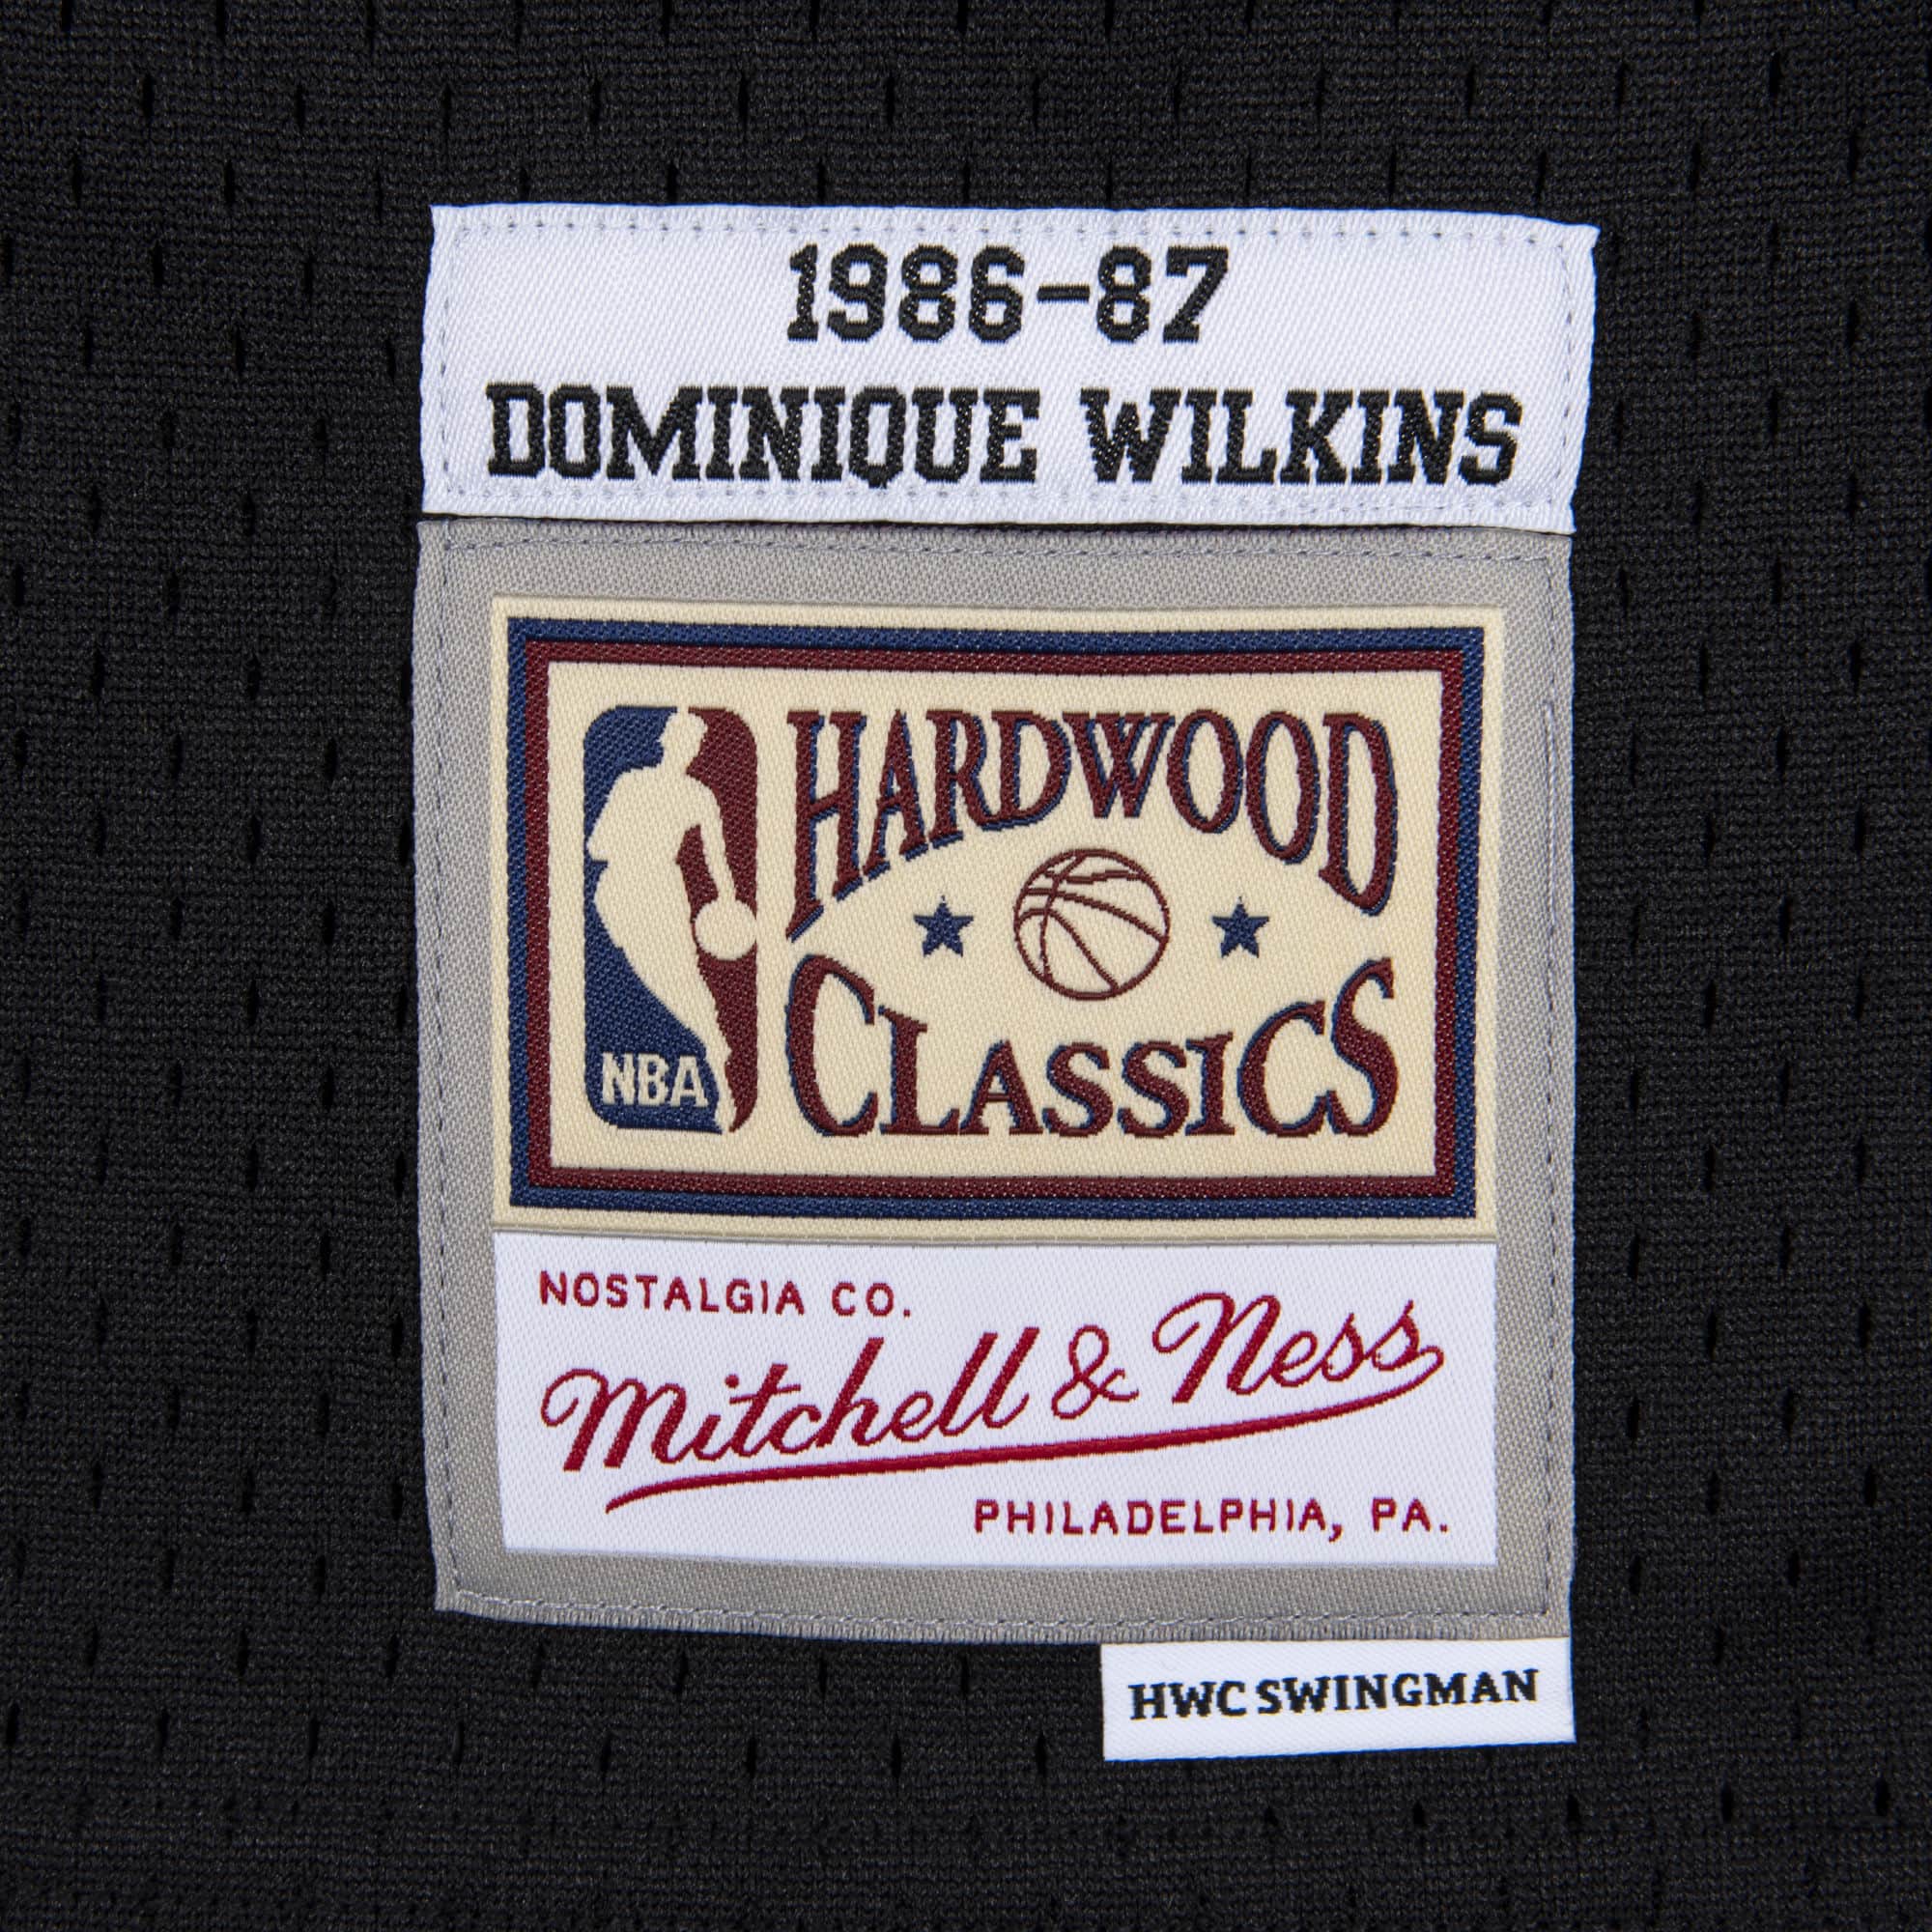 Mitchell & Ness Dominique Wilkins Gold Atlanta Hawks 75th Anniversary 1986-87 Hardwood Classics Swin